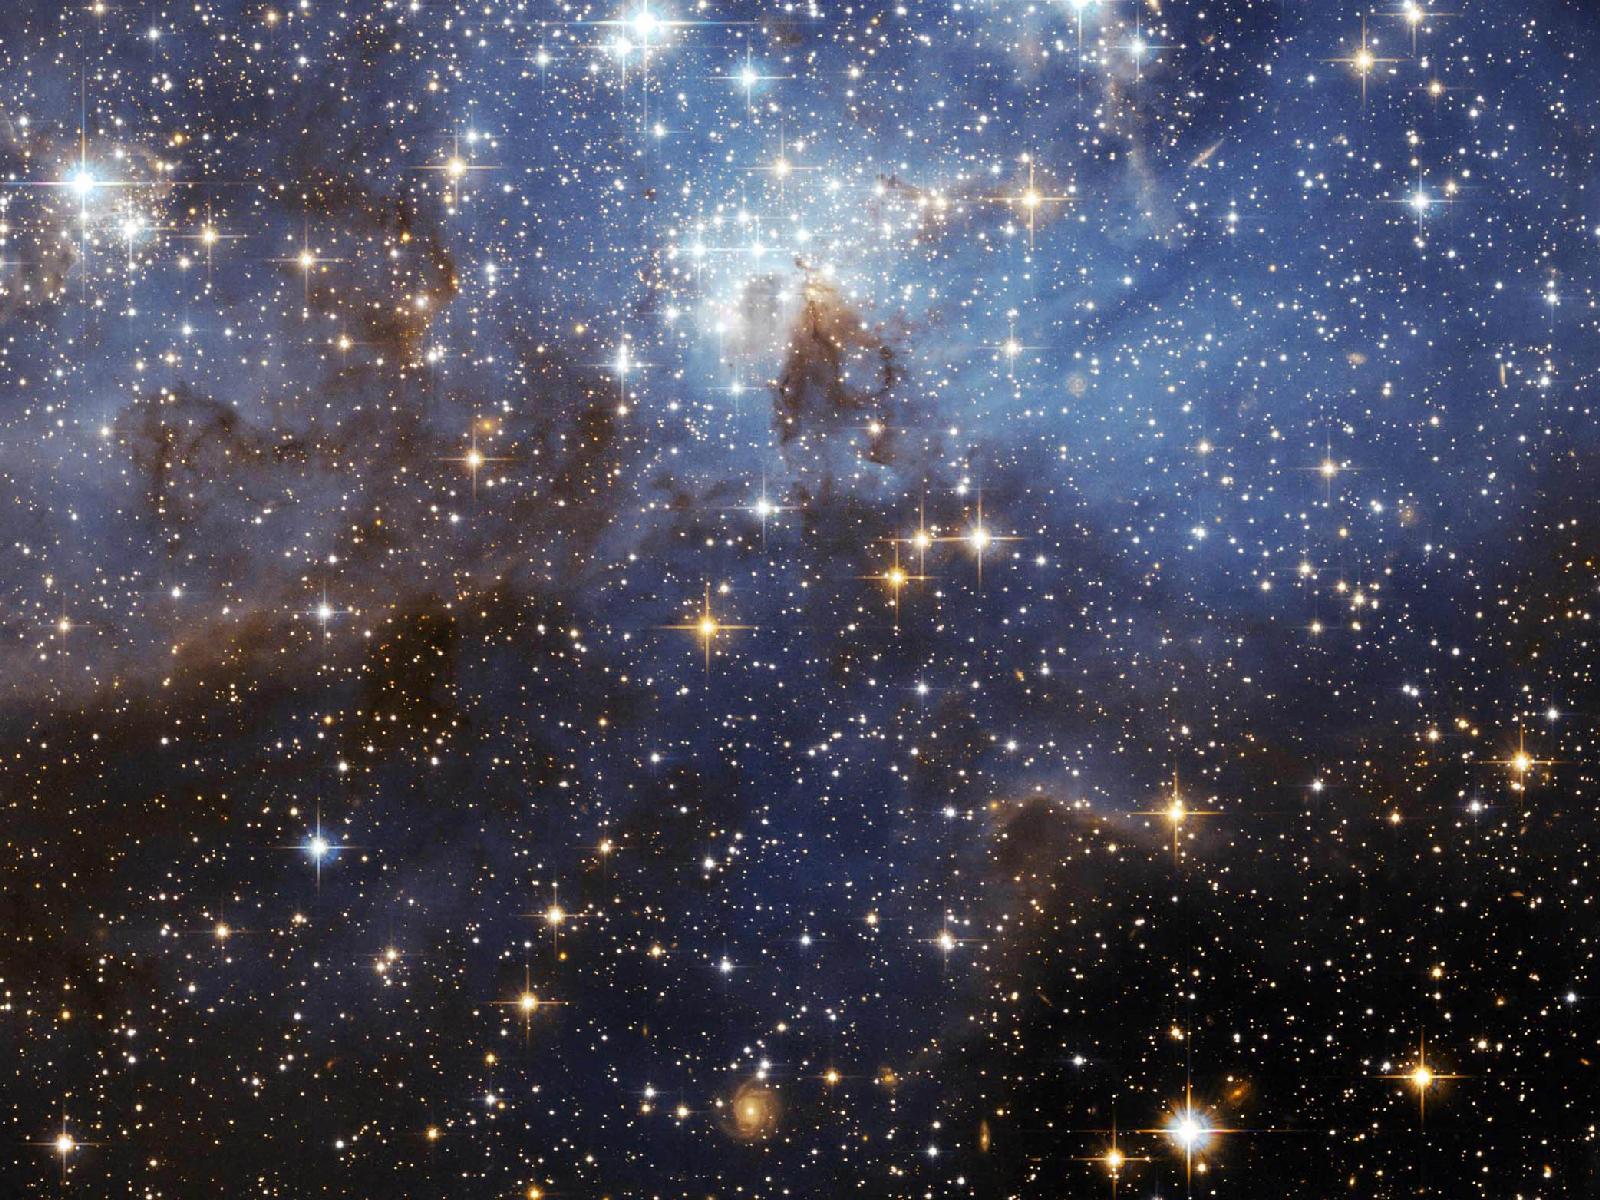 space-stars-hd-15-cool-hd-wallpaper.jpg